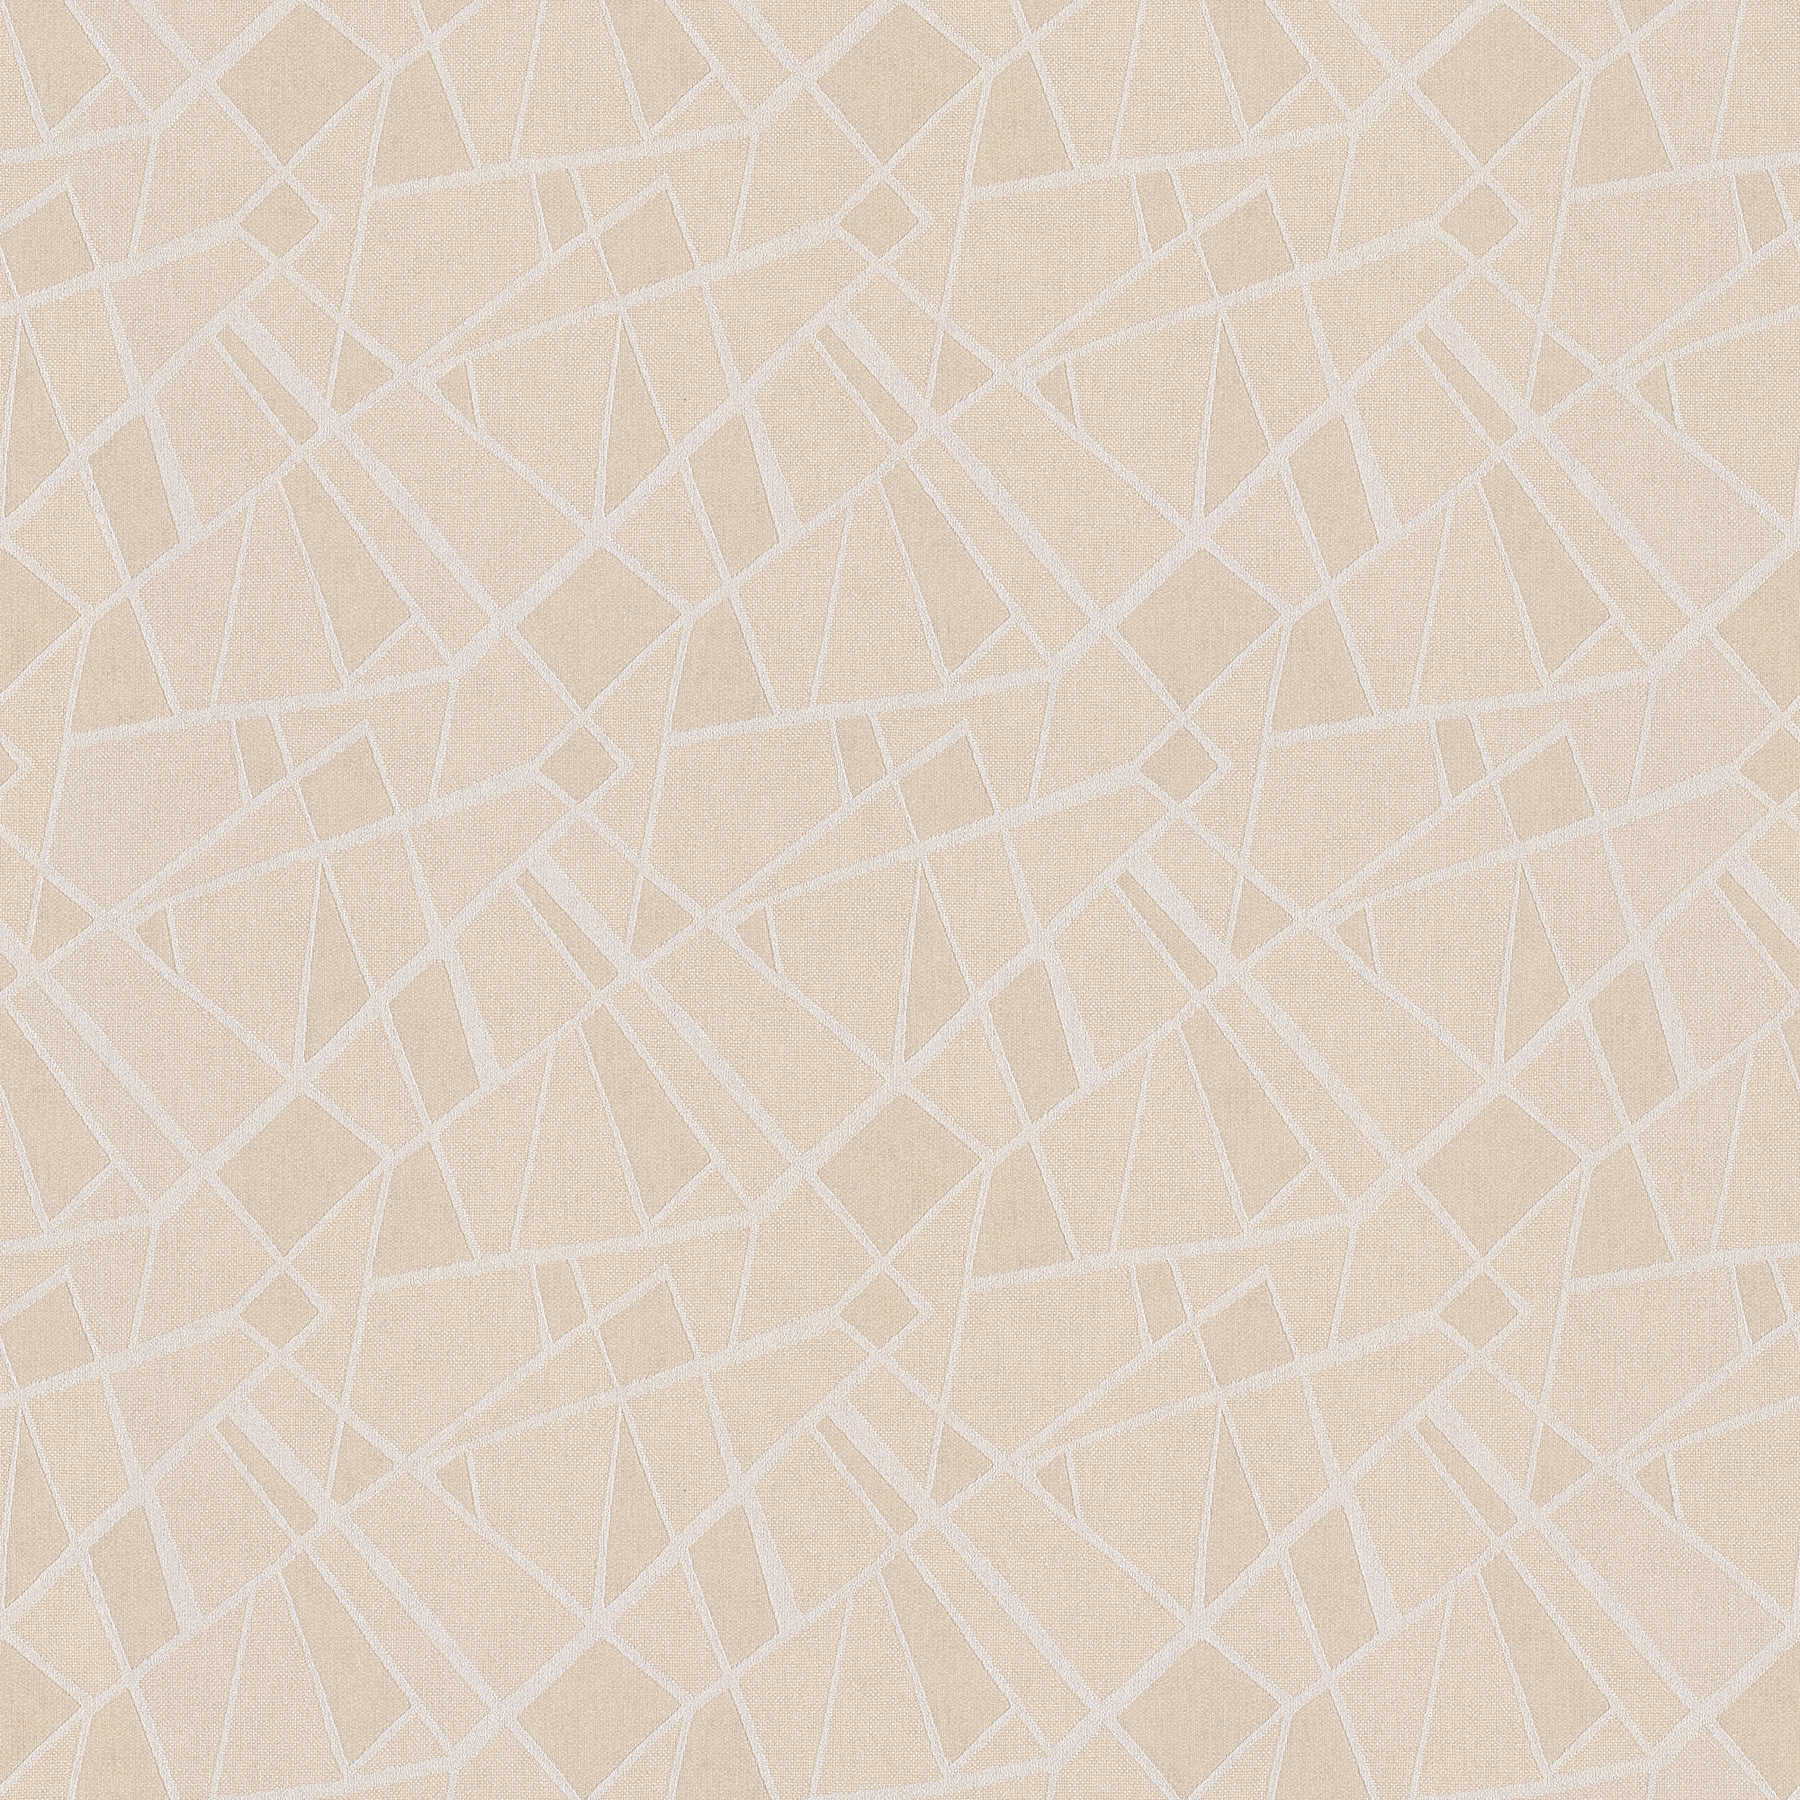         Non-woven wallpaper 50s facet pattern with metallic effect - beige, cream
    